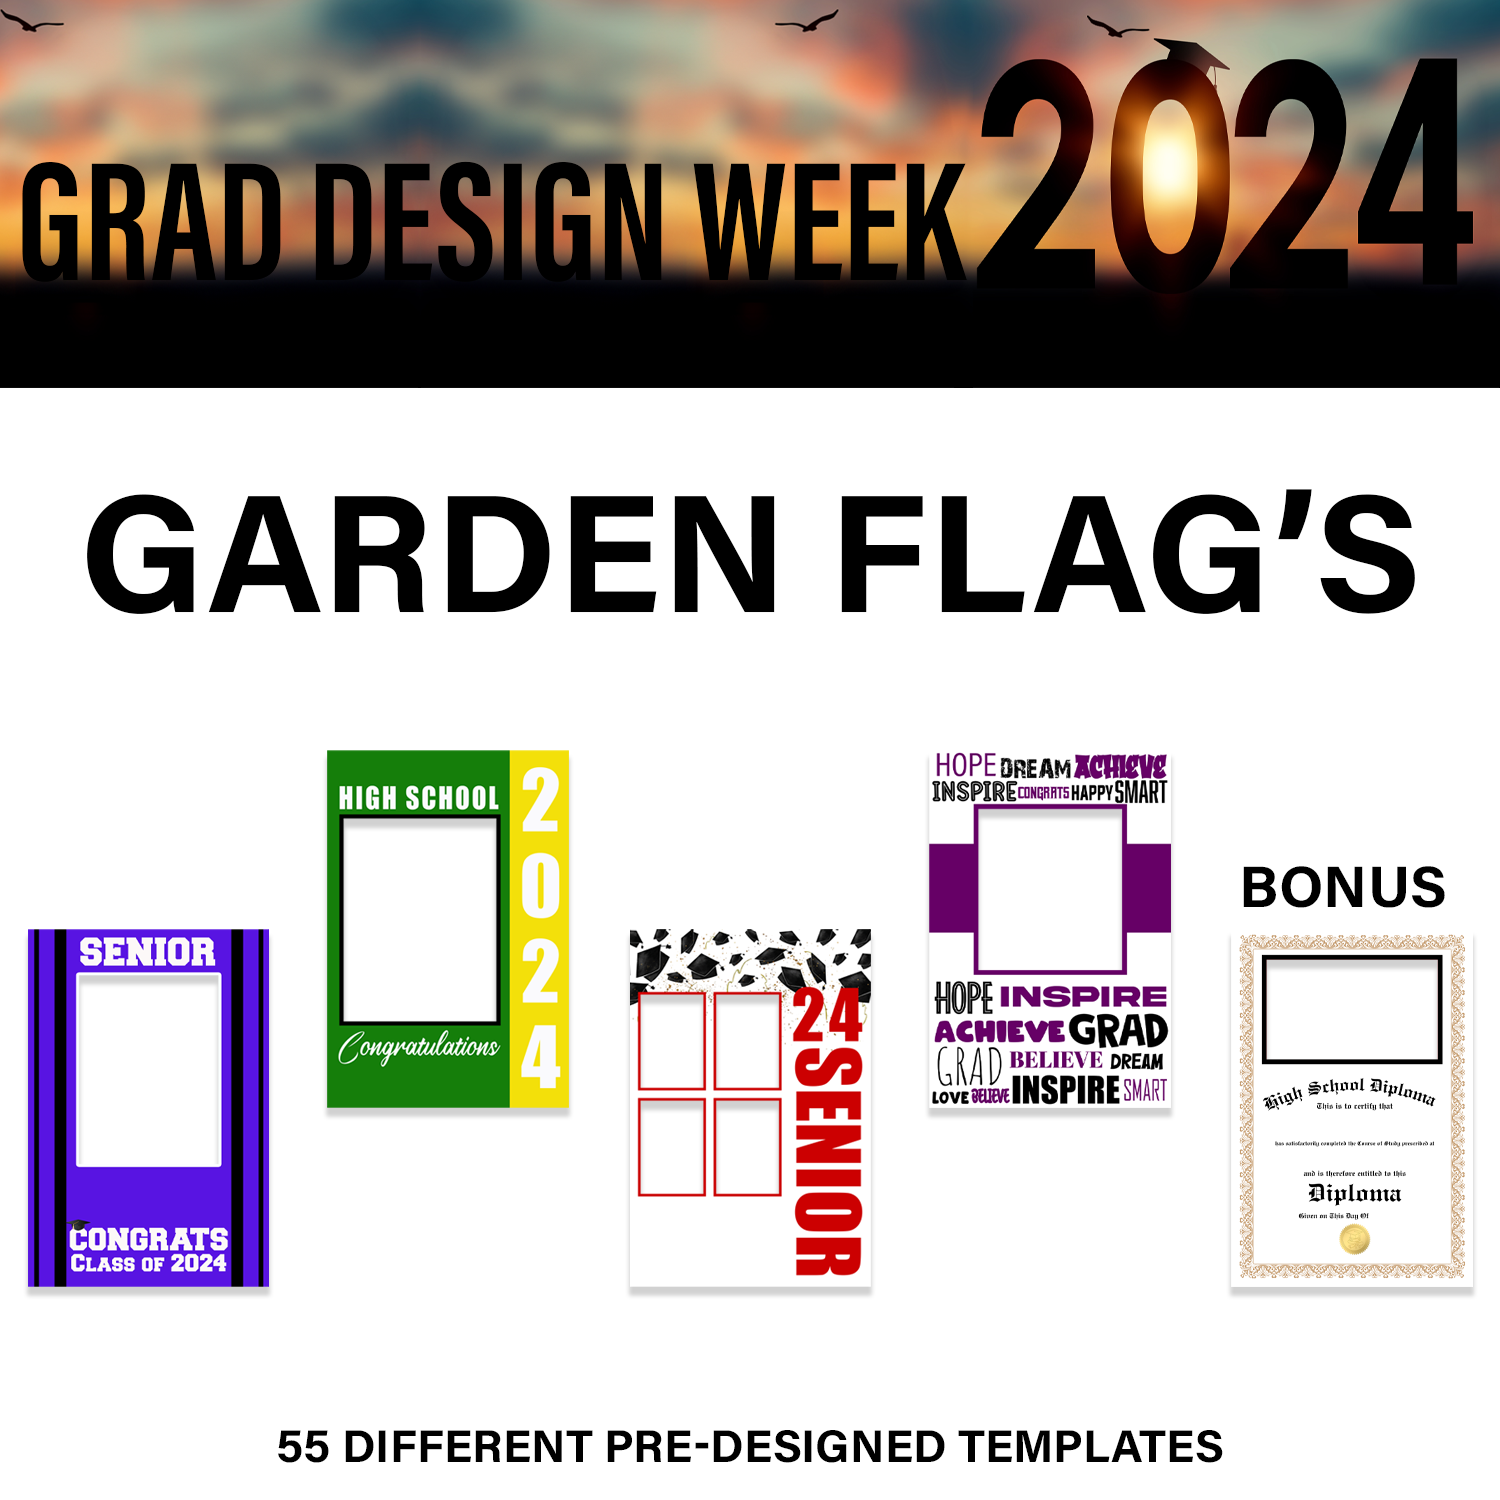 Grad Design Week 2024- GARDEN FLAG'S